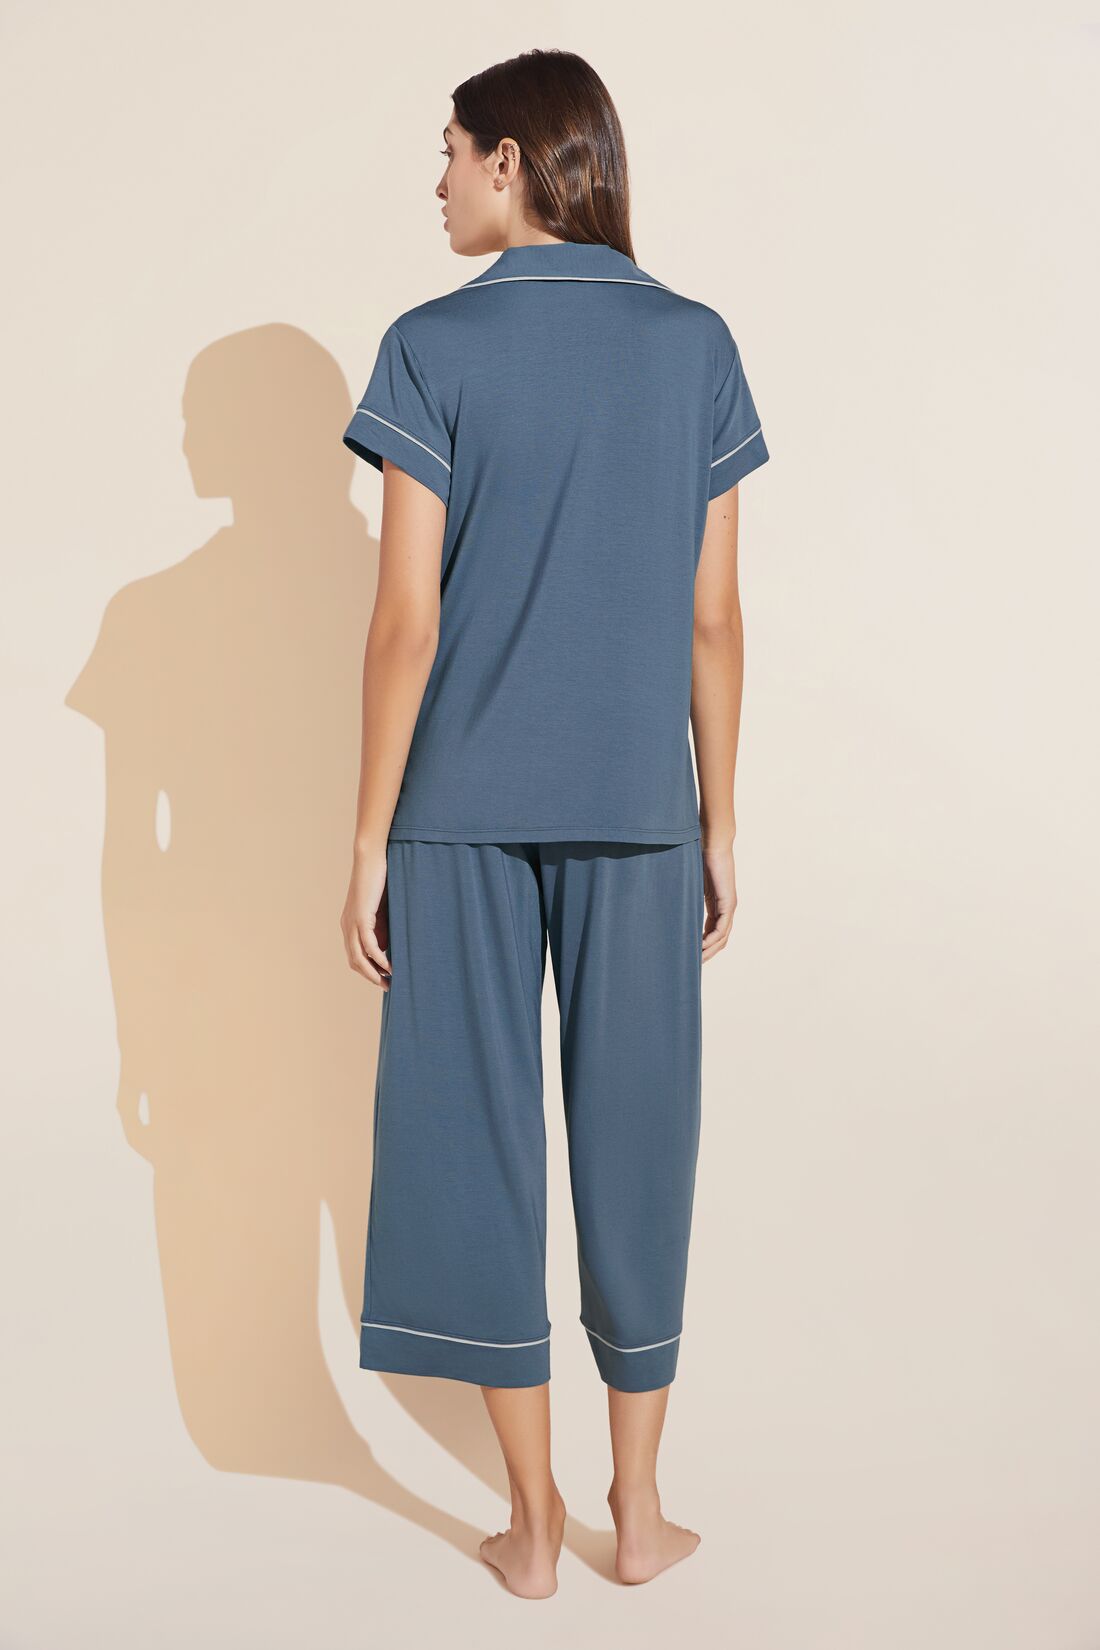 Gisele TENCEL™ Modal Short Sleeve Cropped PJ Set - Coastal Blue/Ice Blue